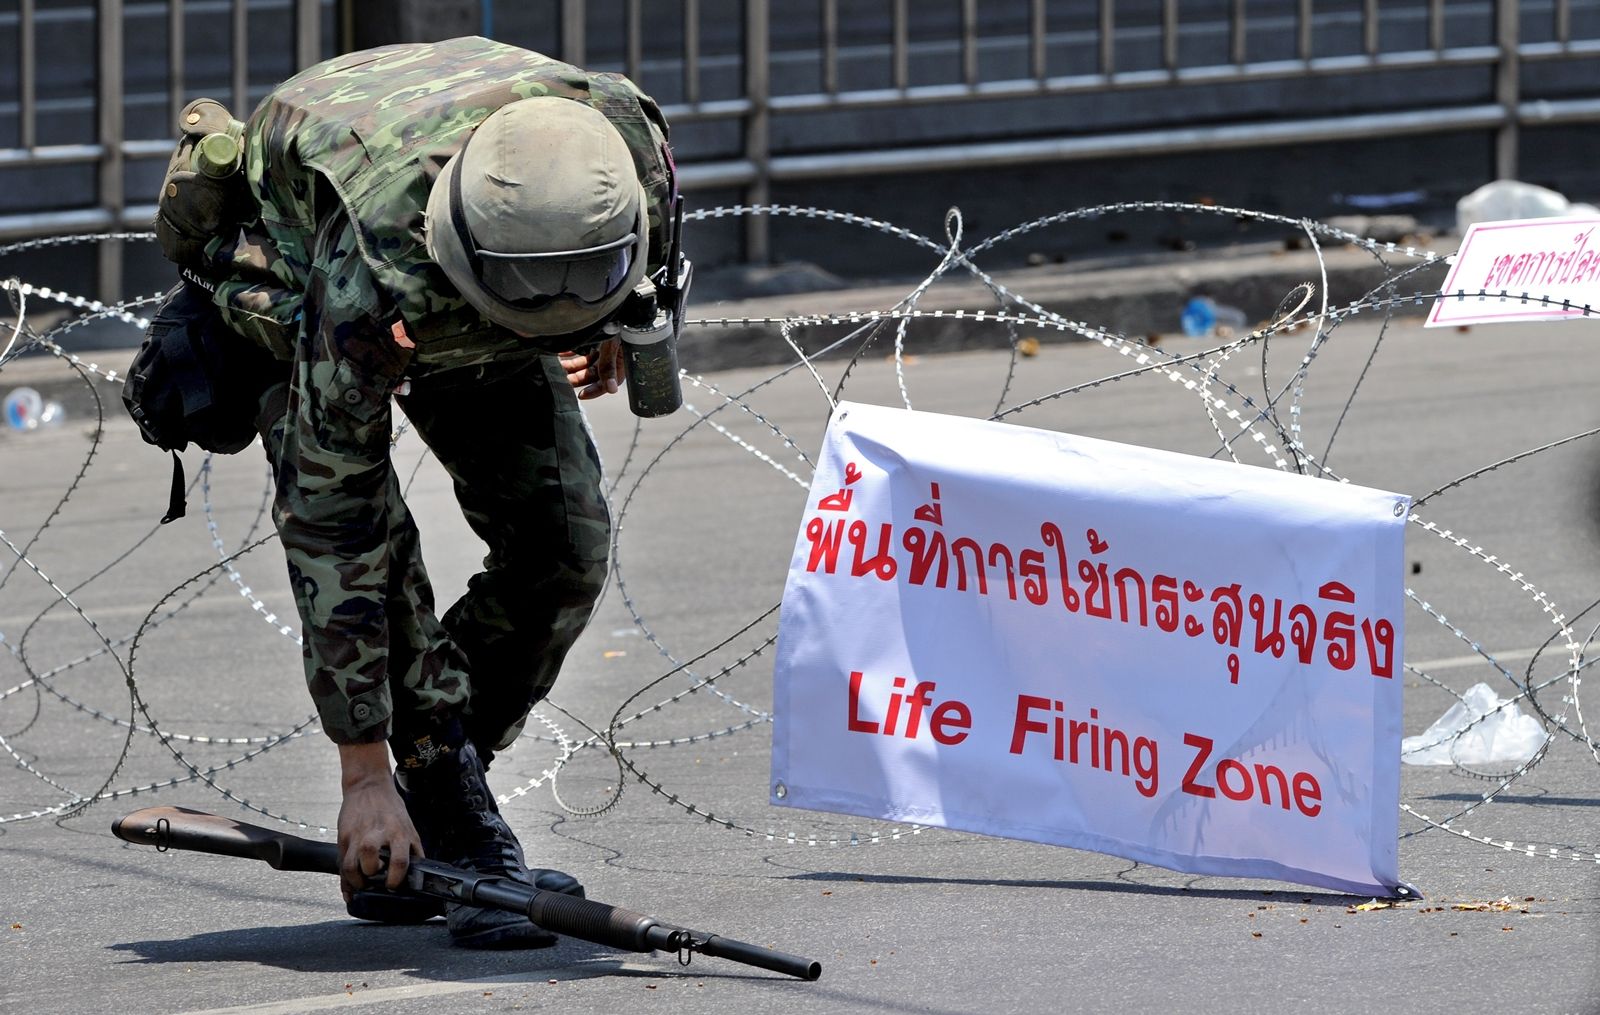 AFP-พื้นที่ใช้กระสุนจริง-life firing zone-สลายชุมนุมเสื้อแดง พ.ค.2553.jpg